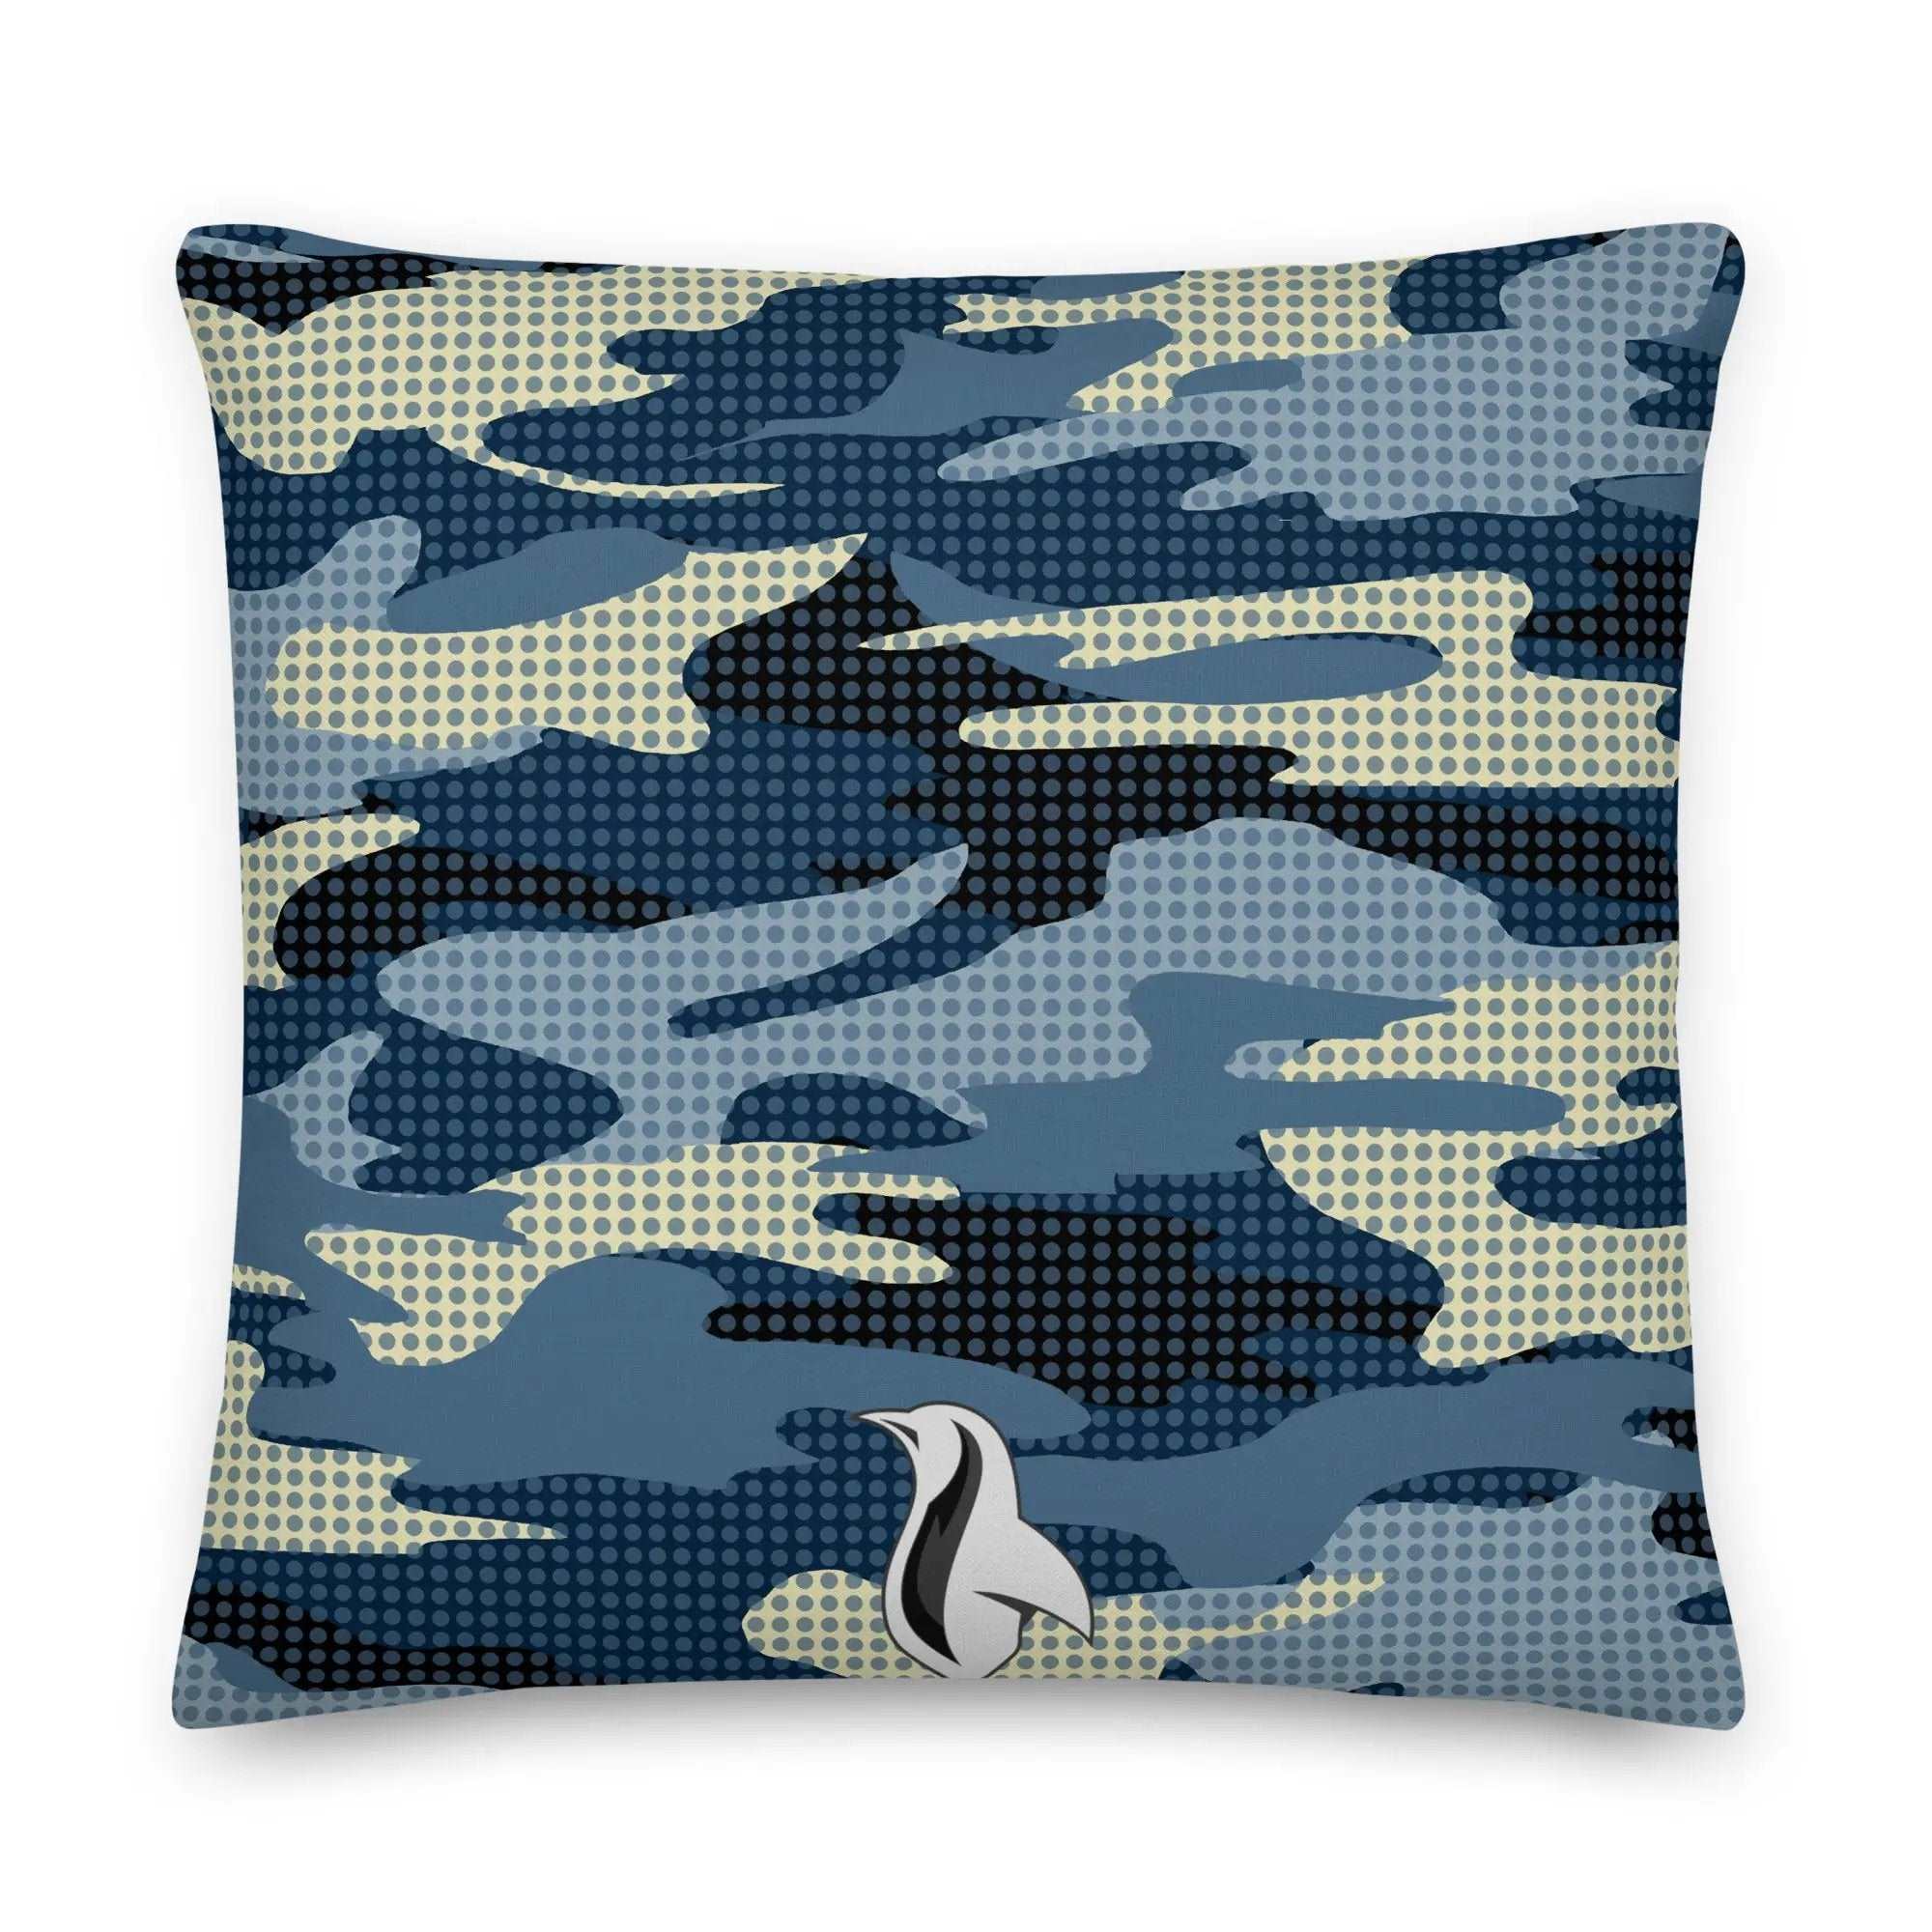 a blue camo pillow with the mt rainier logo on it